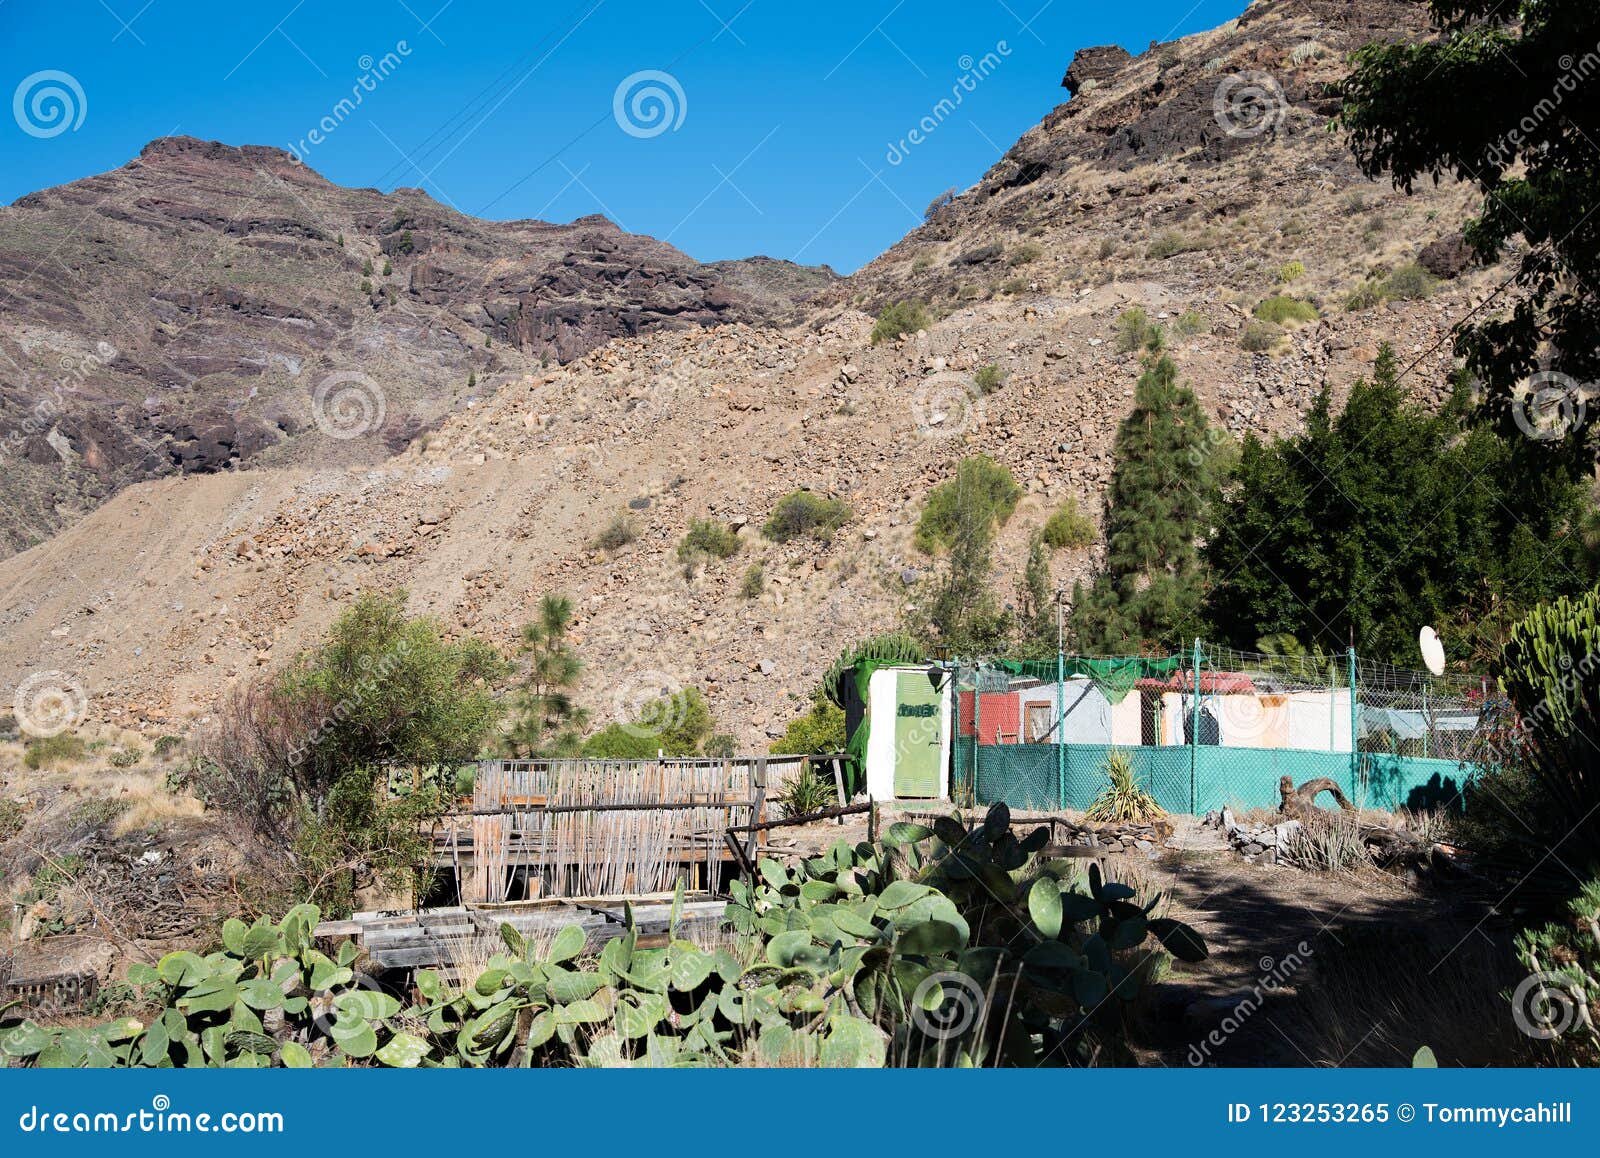 small country house in baranco del vaquero